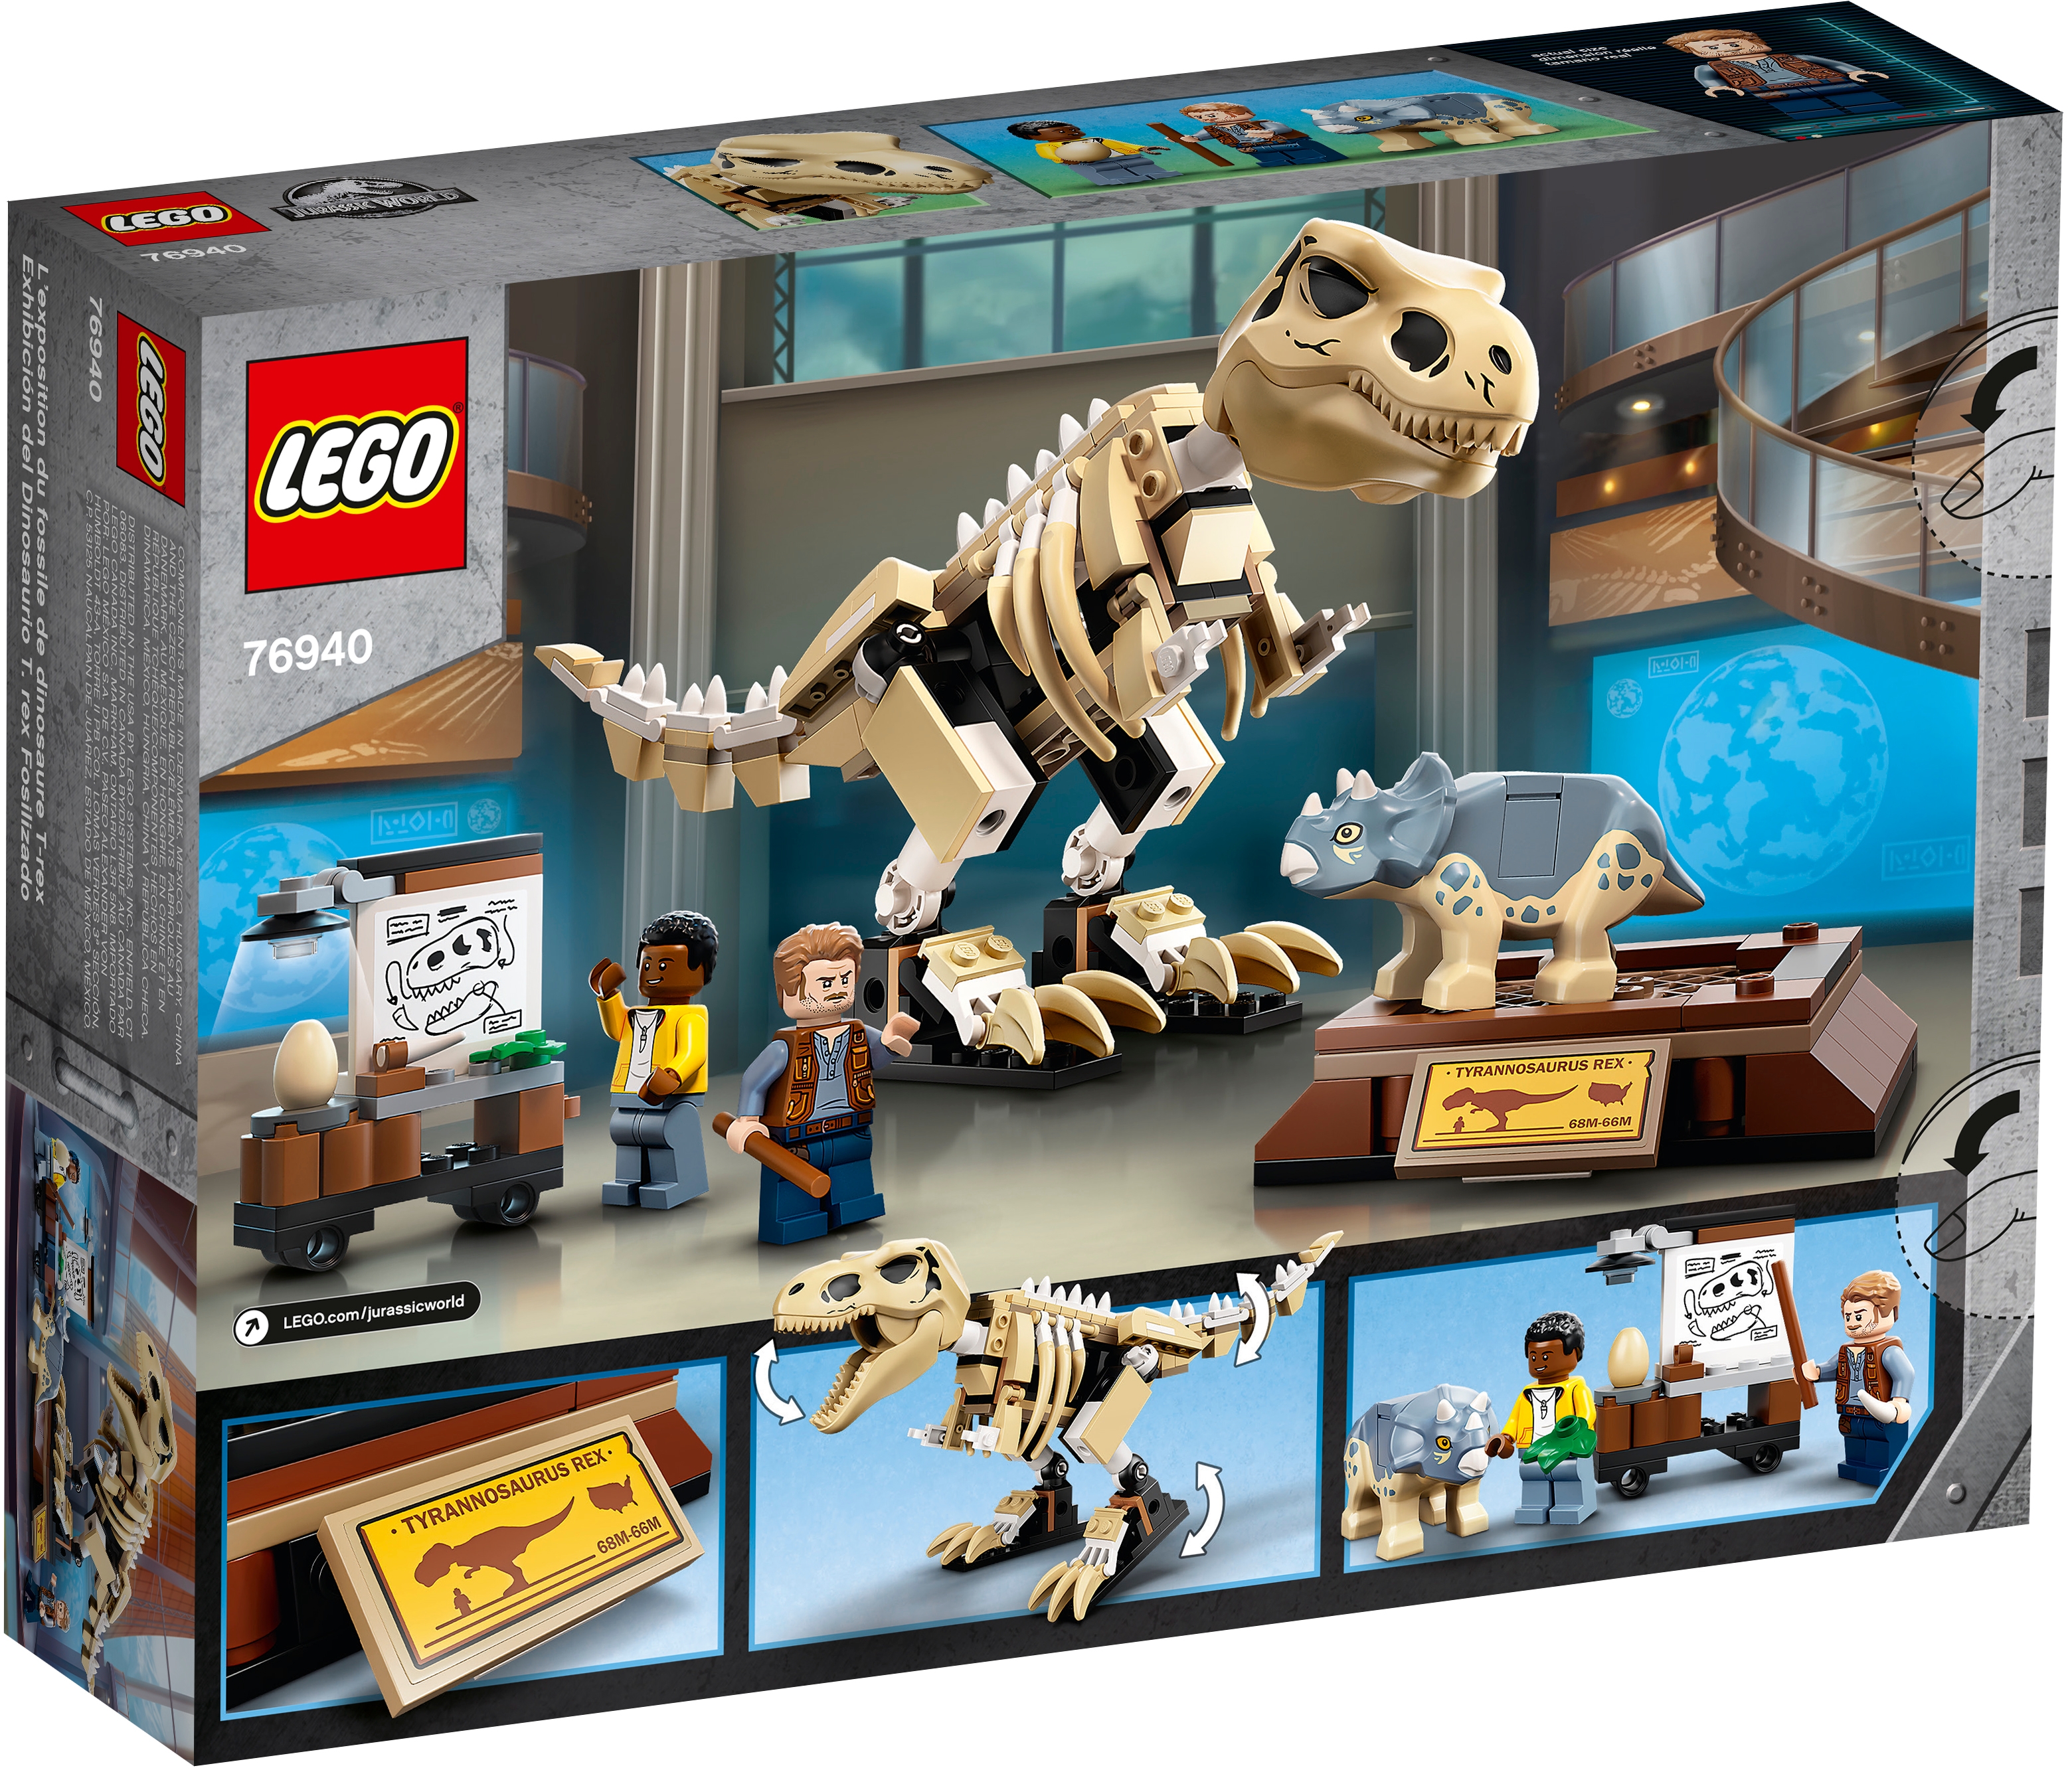 1/6x Groß Lego Dinosaurier Tyrannosaurus Spielzeug Jurassic World Park Serie Neu 